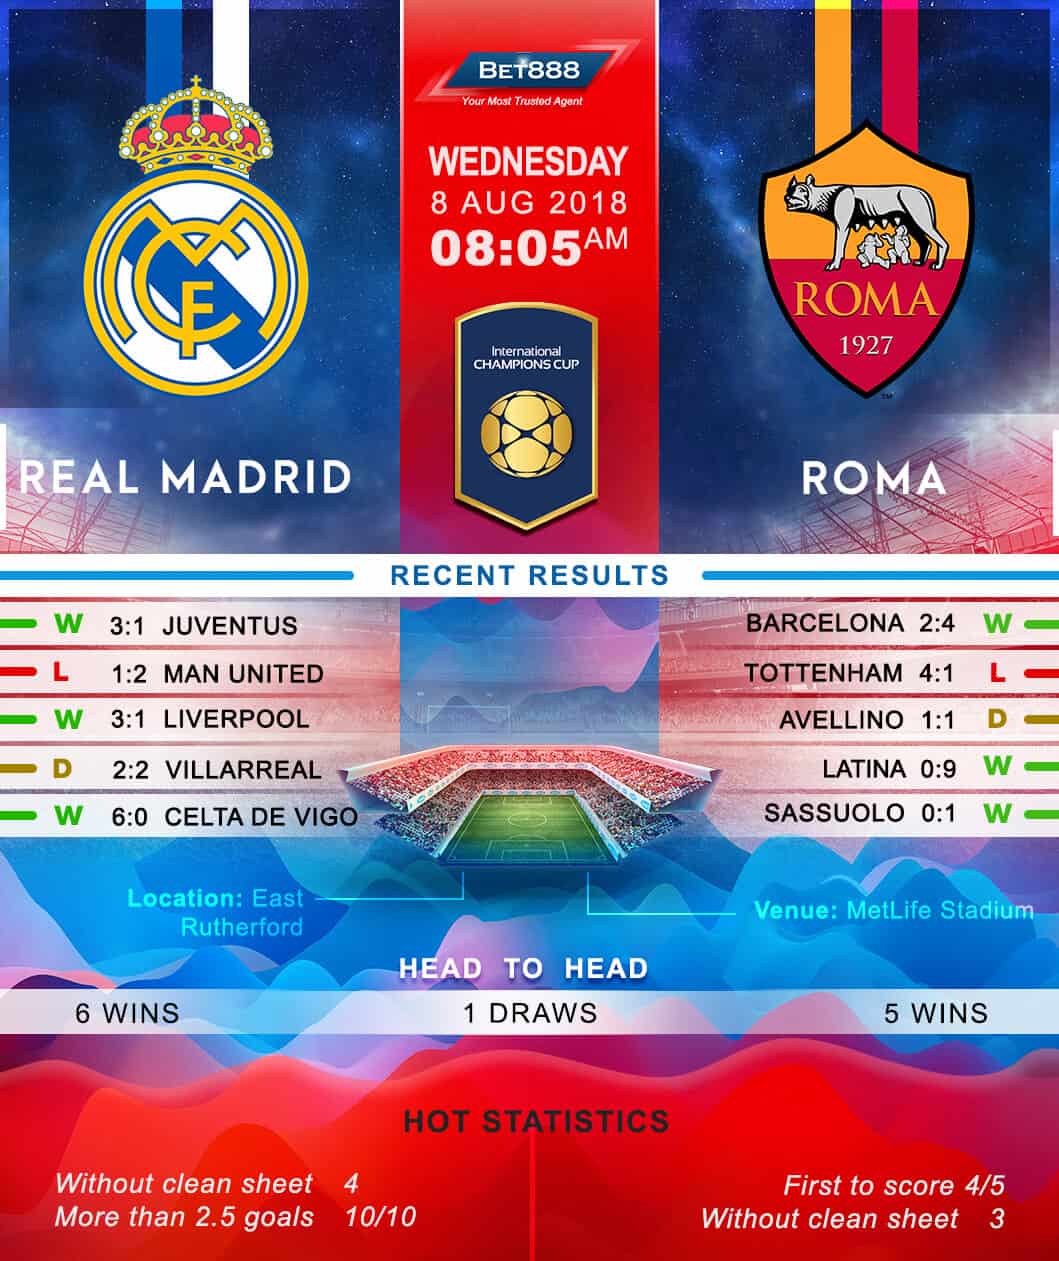 Real Madrid vs AS Roma 08/08/18